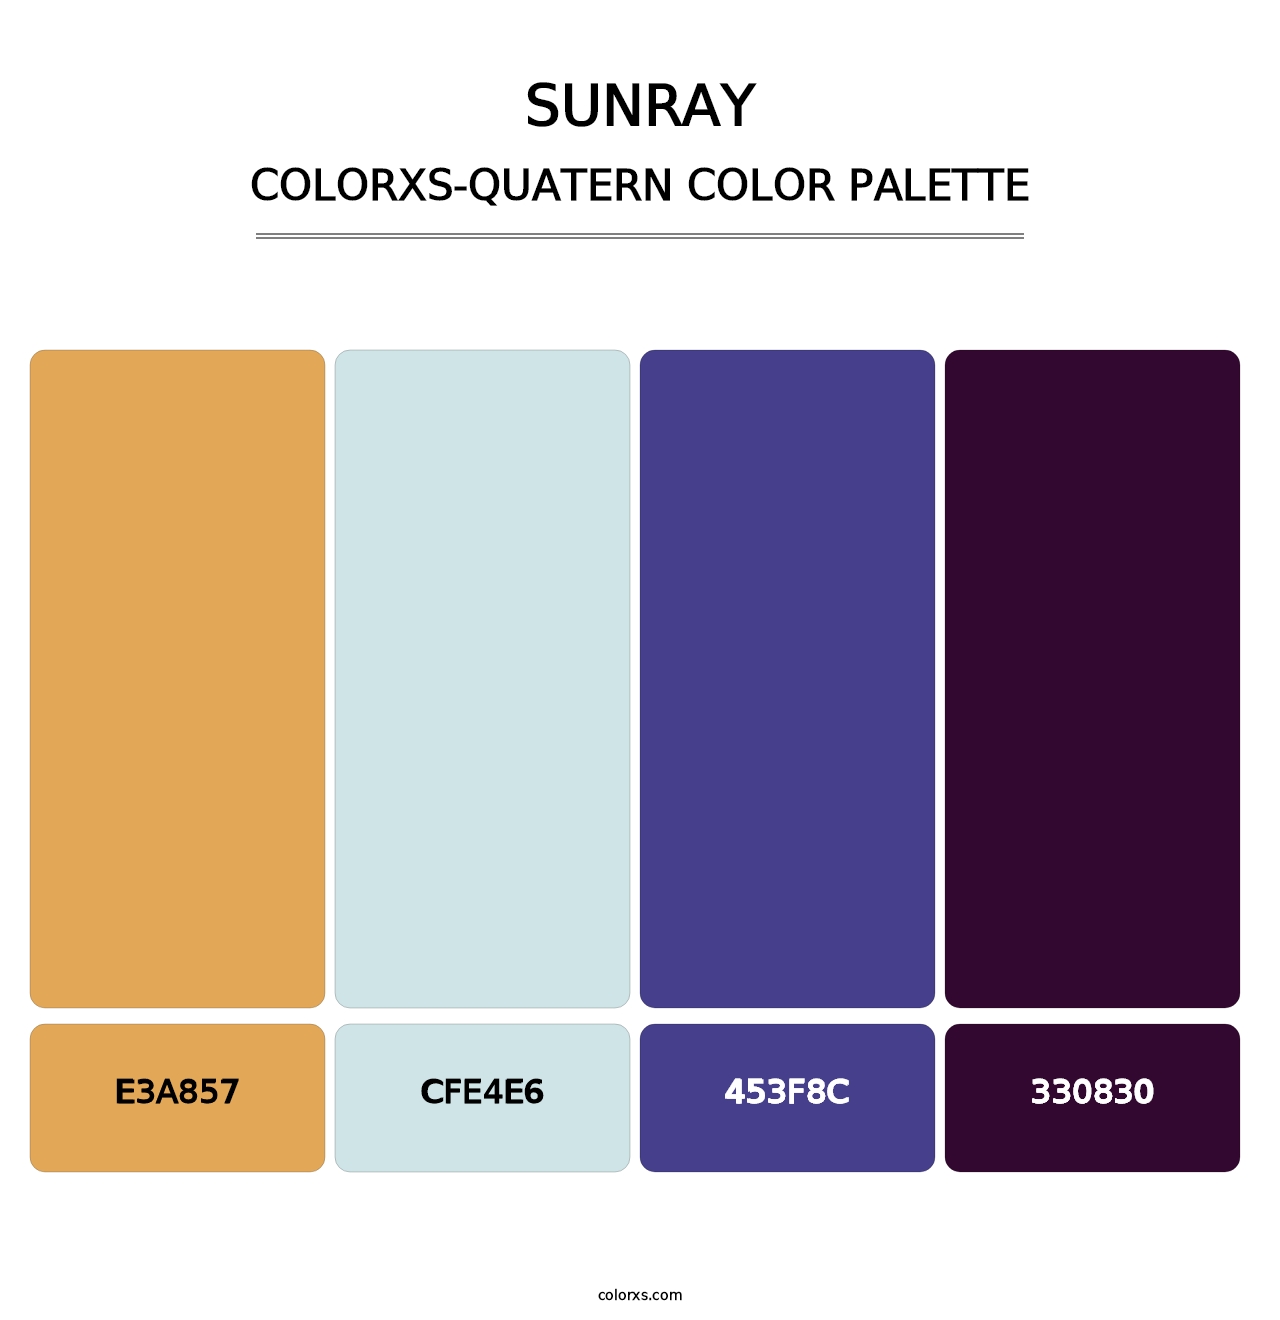 Sunray - Colorxs Quatern Palette